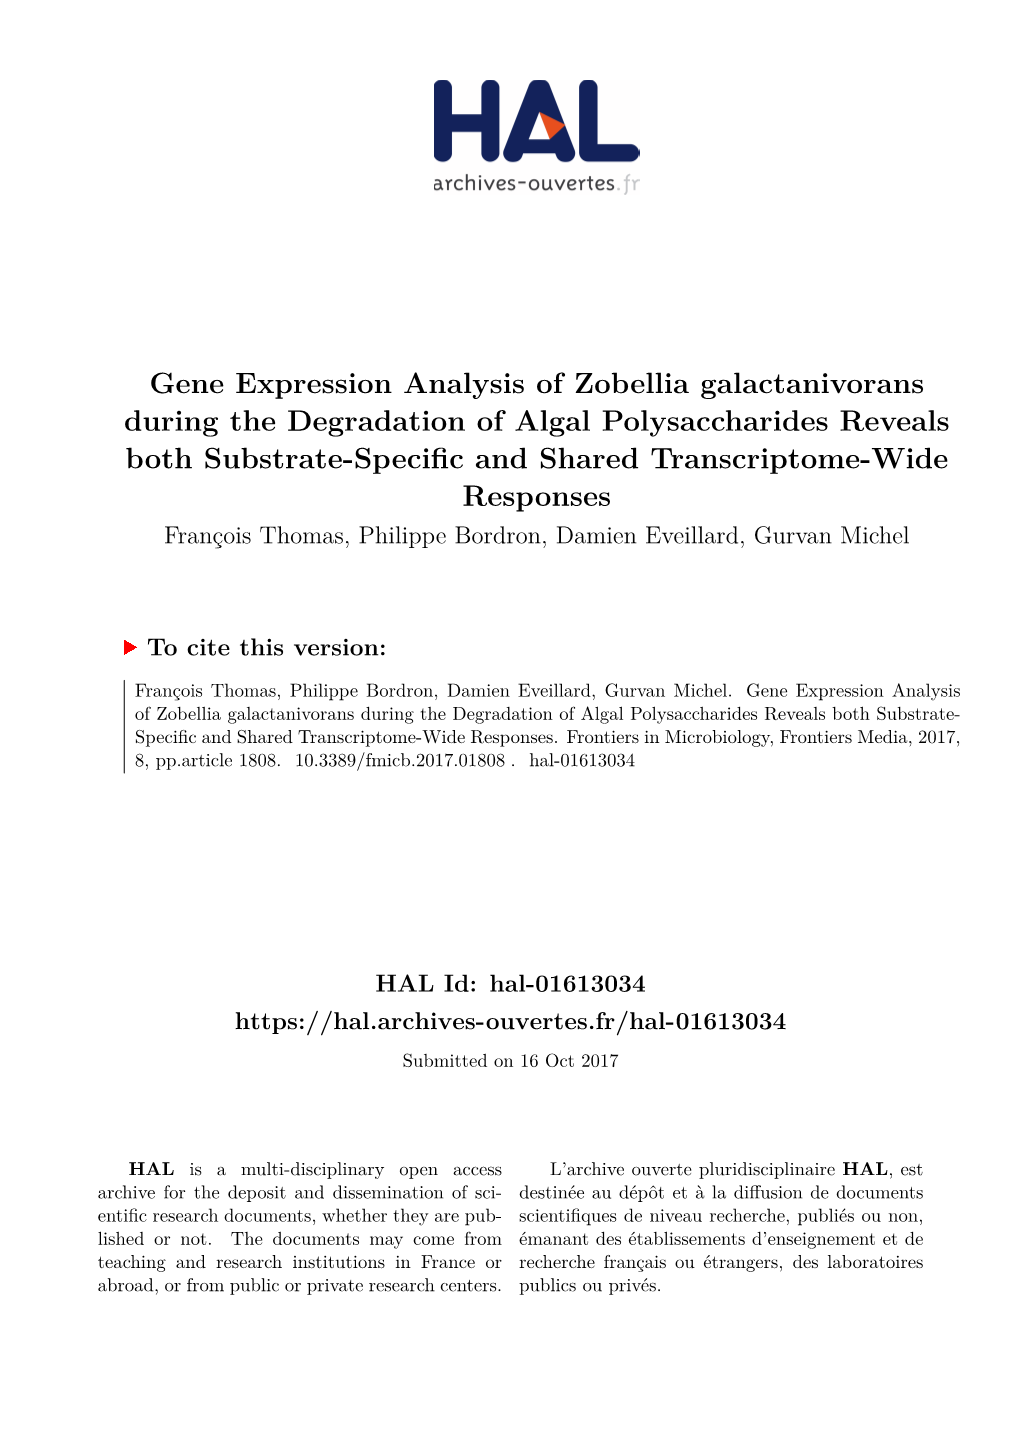 Gene Expression Analysis of Zobellia Galactanivorans During The